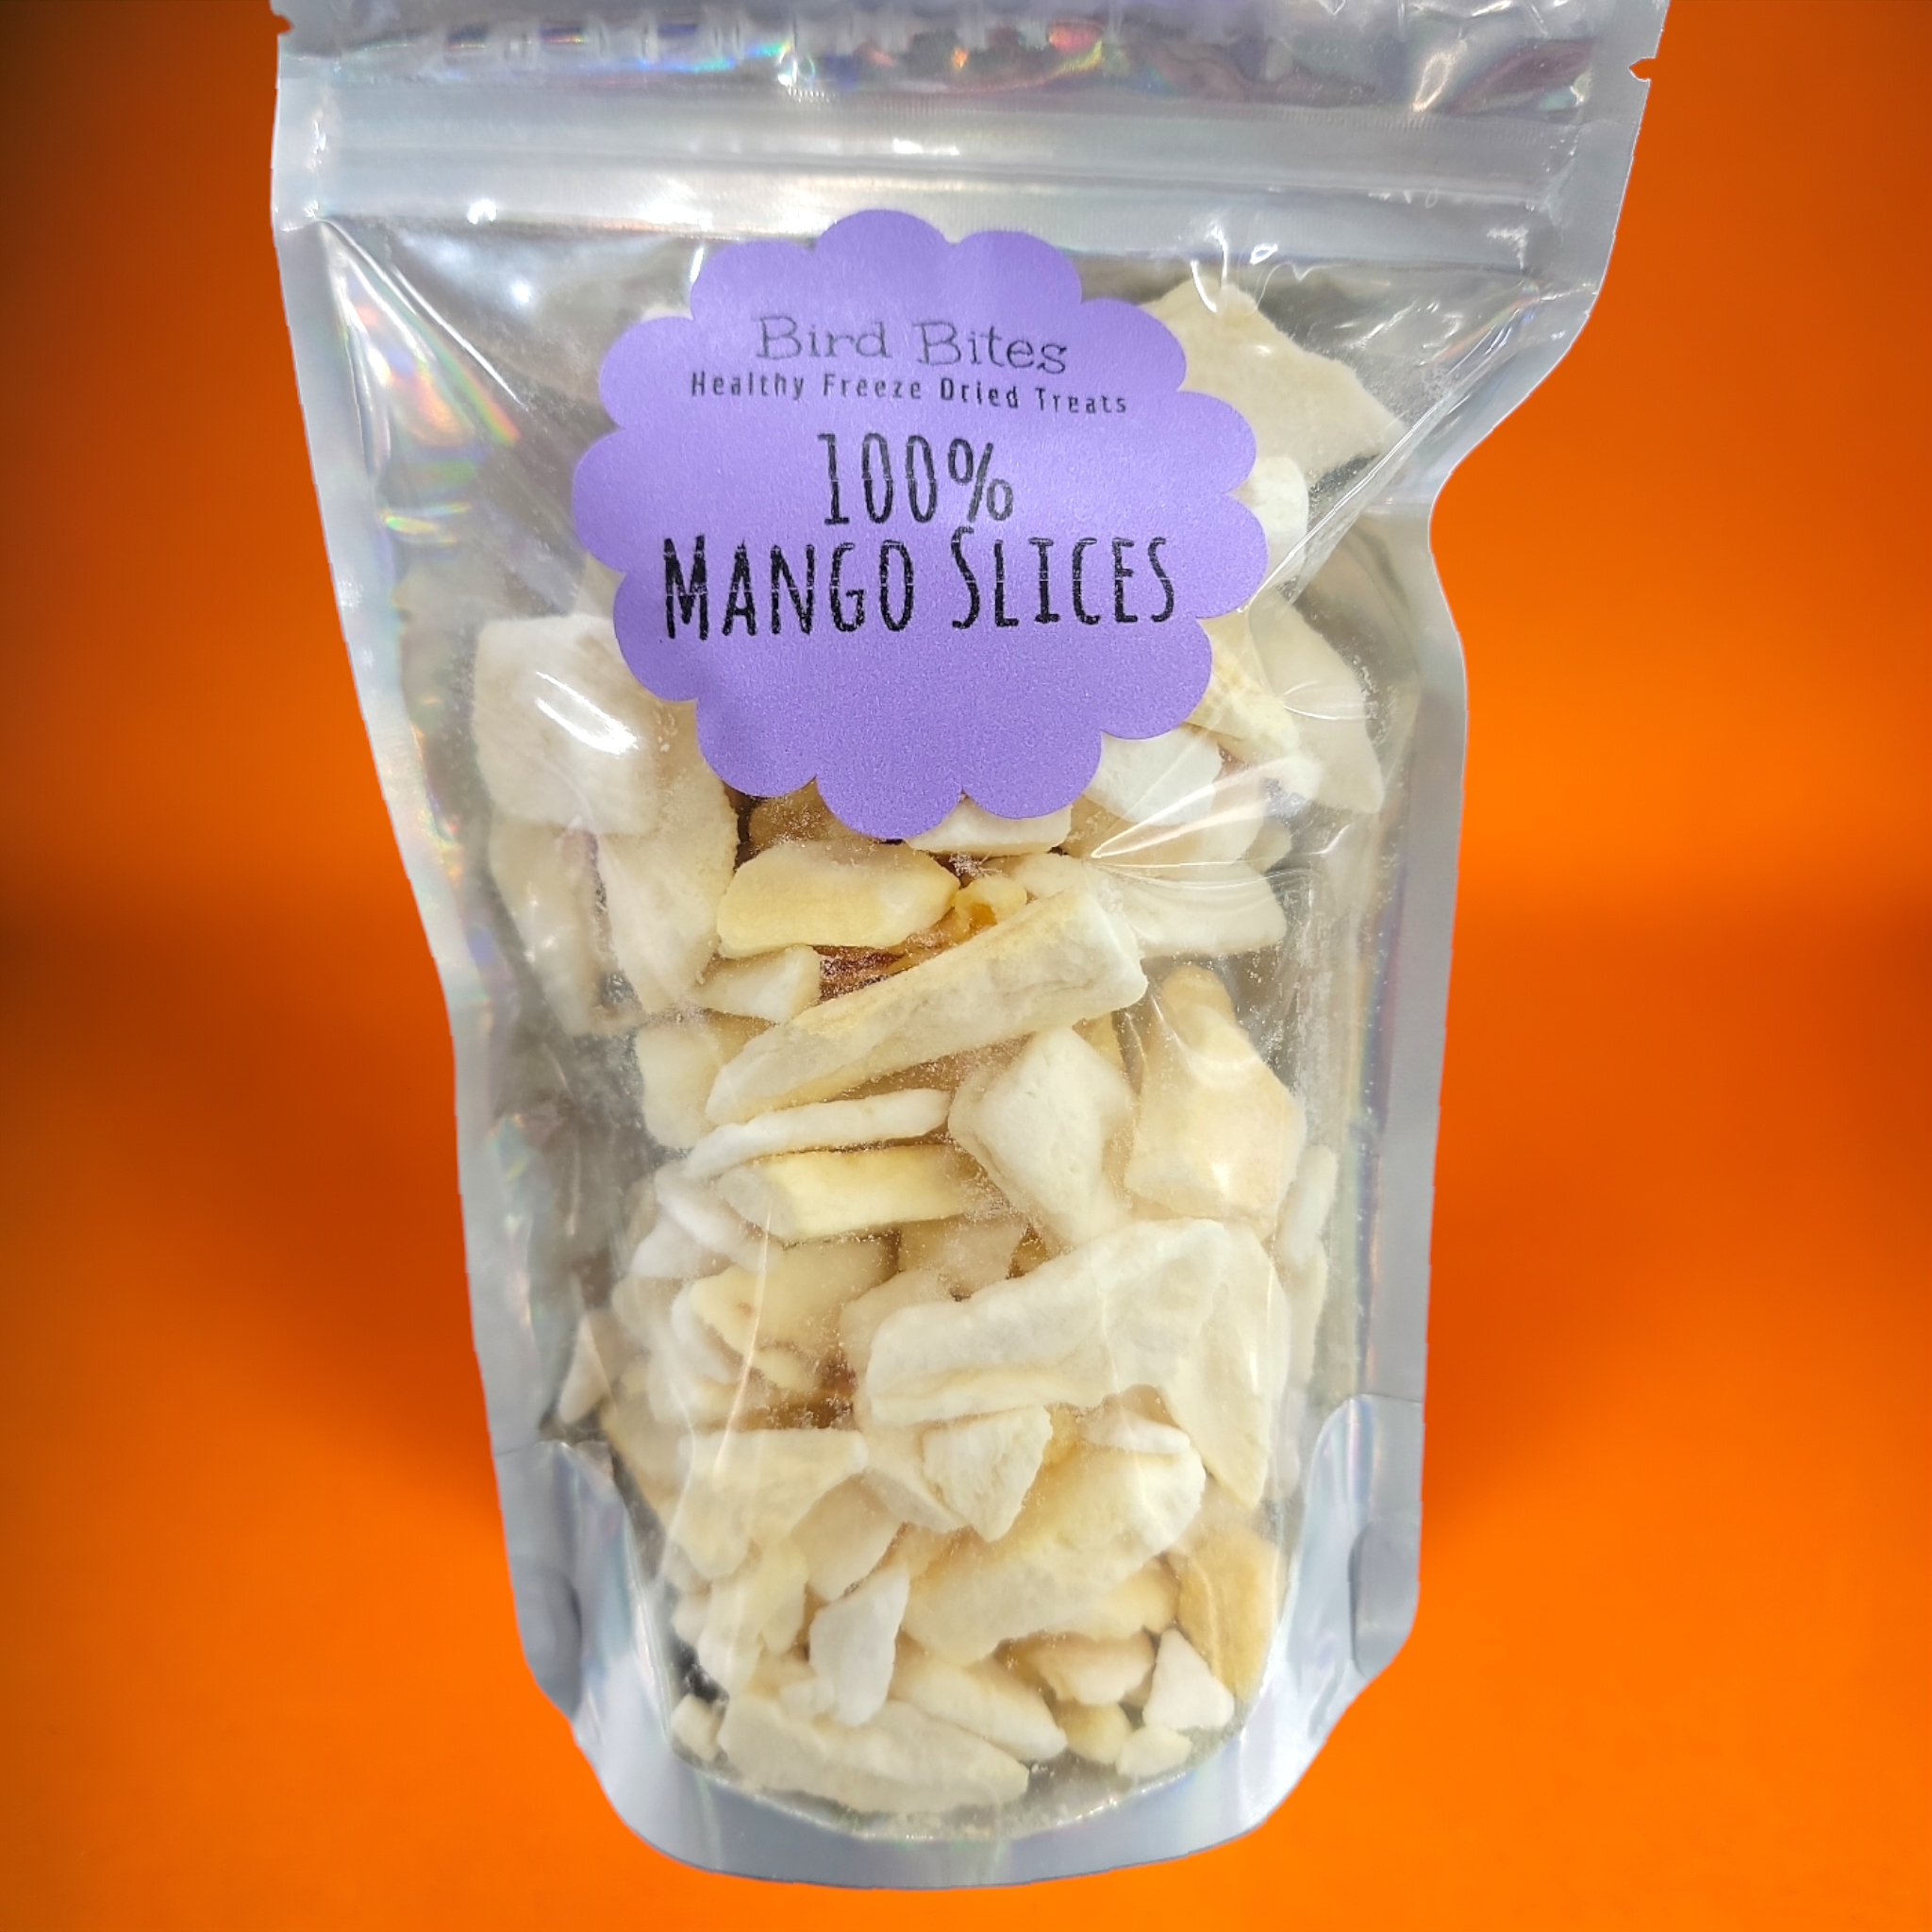 100% Mango Slices - 1.5 Cups - Bird Bites Healthy Freeze Dried Treats